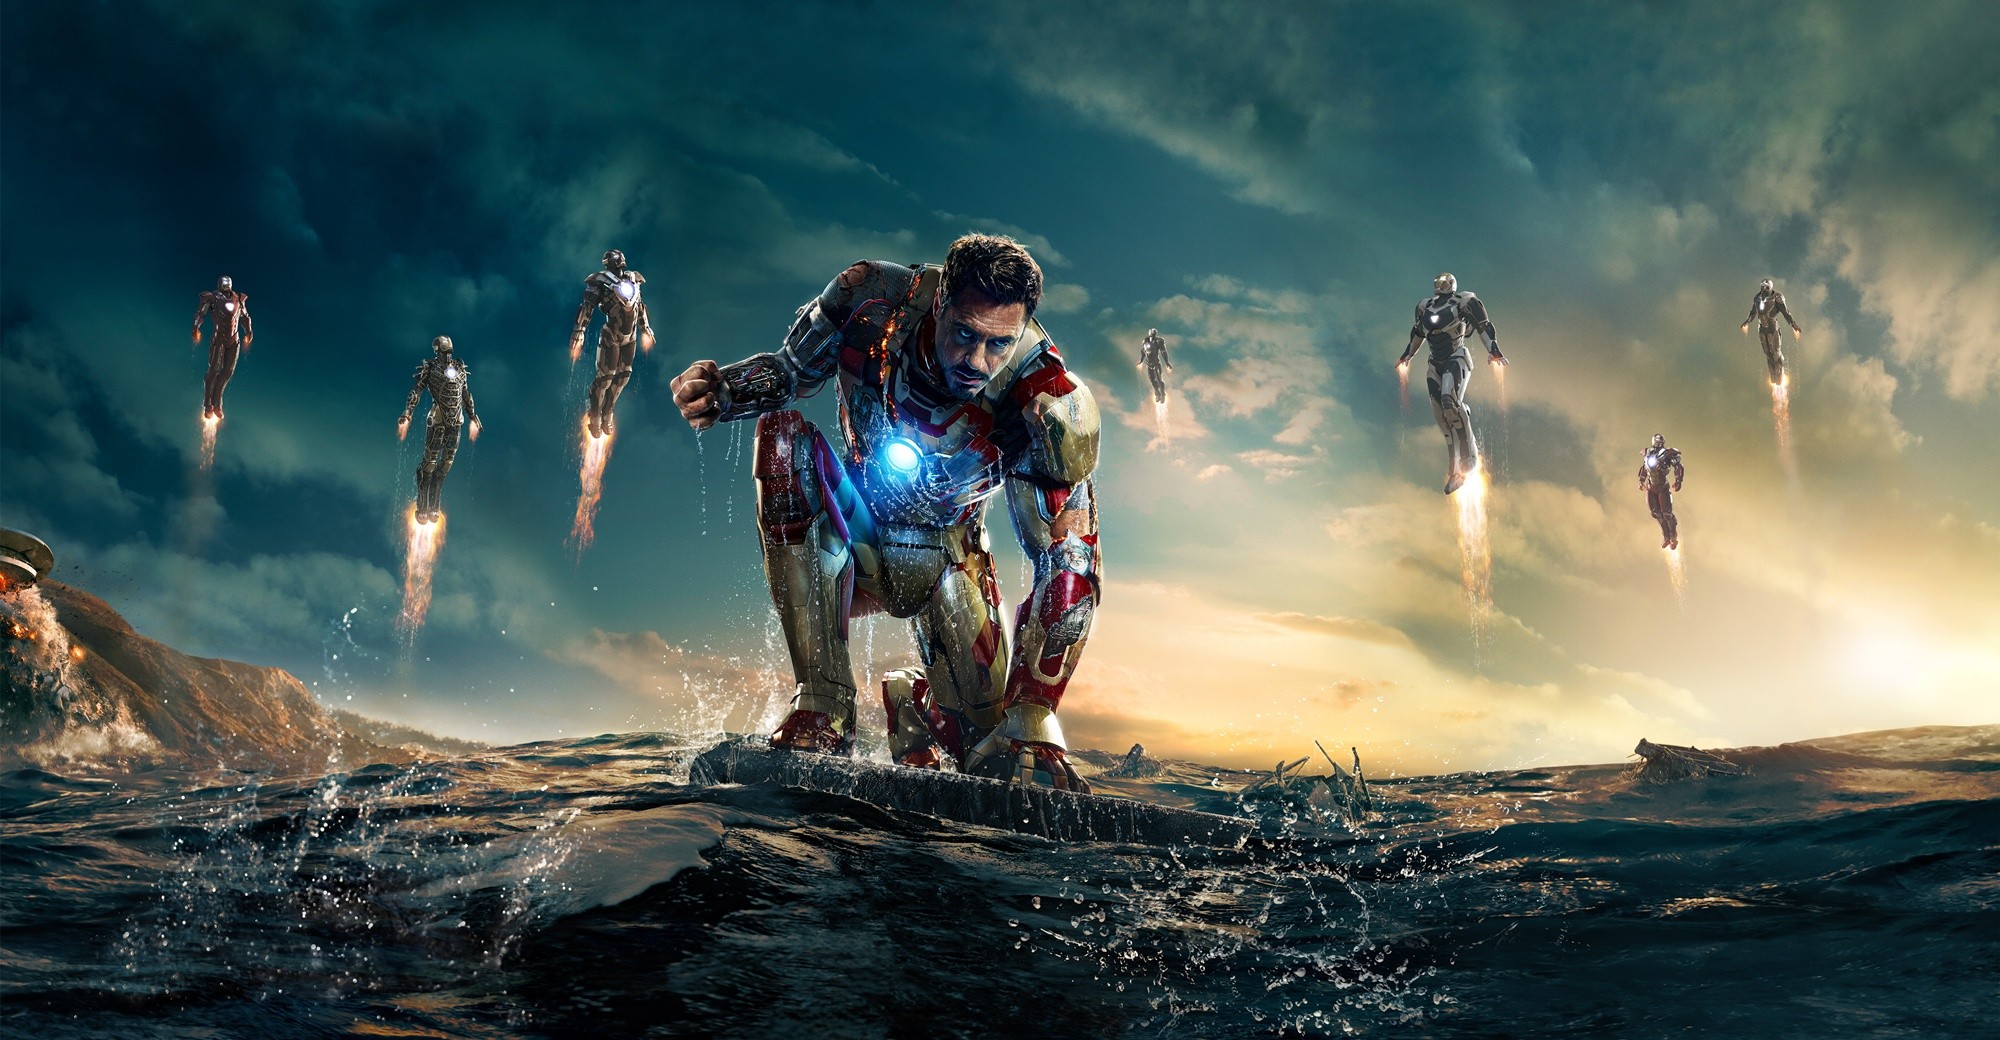 Poster phim Iron Man 3 năm 2013